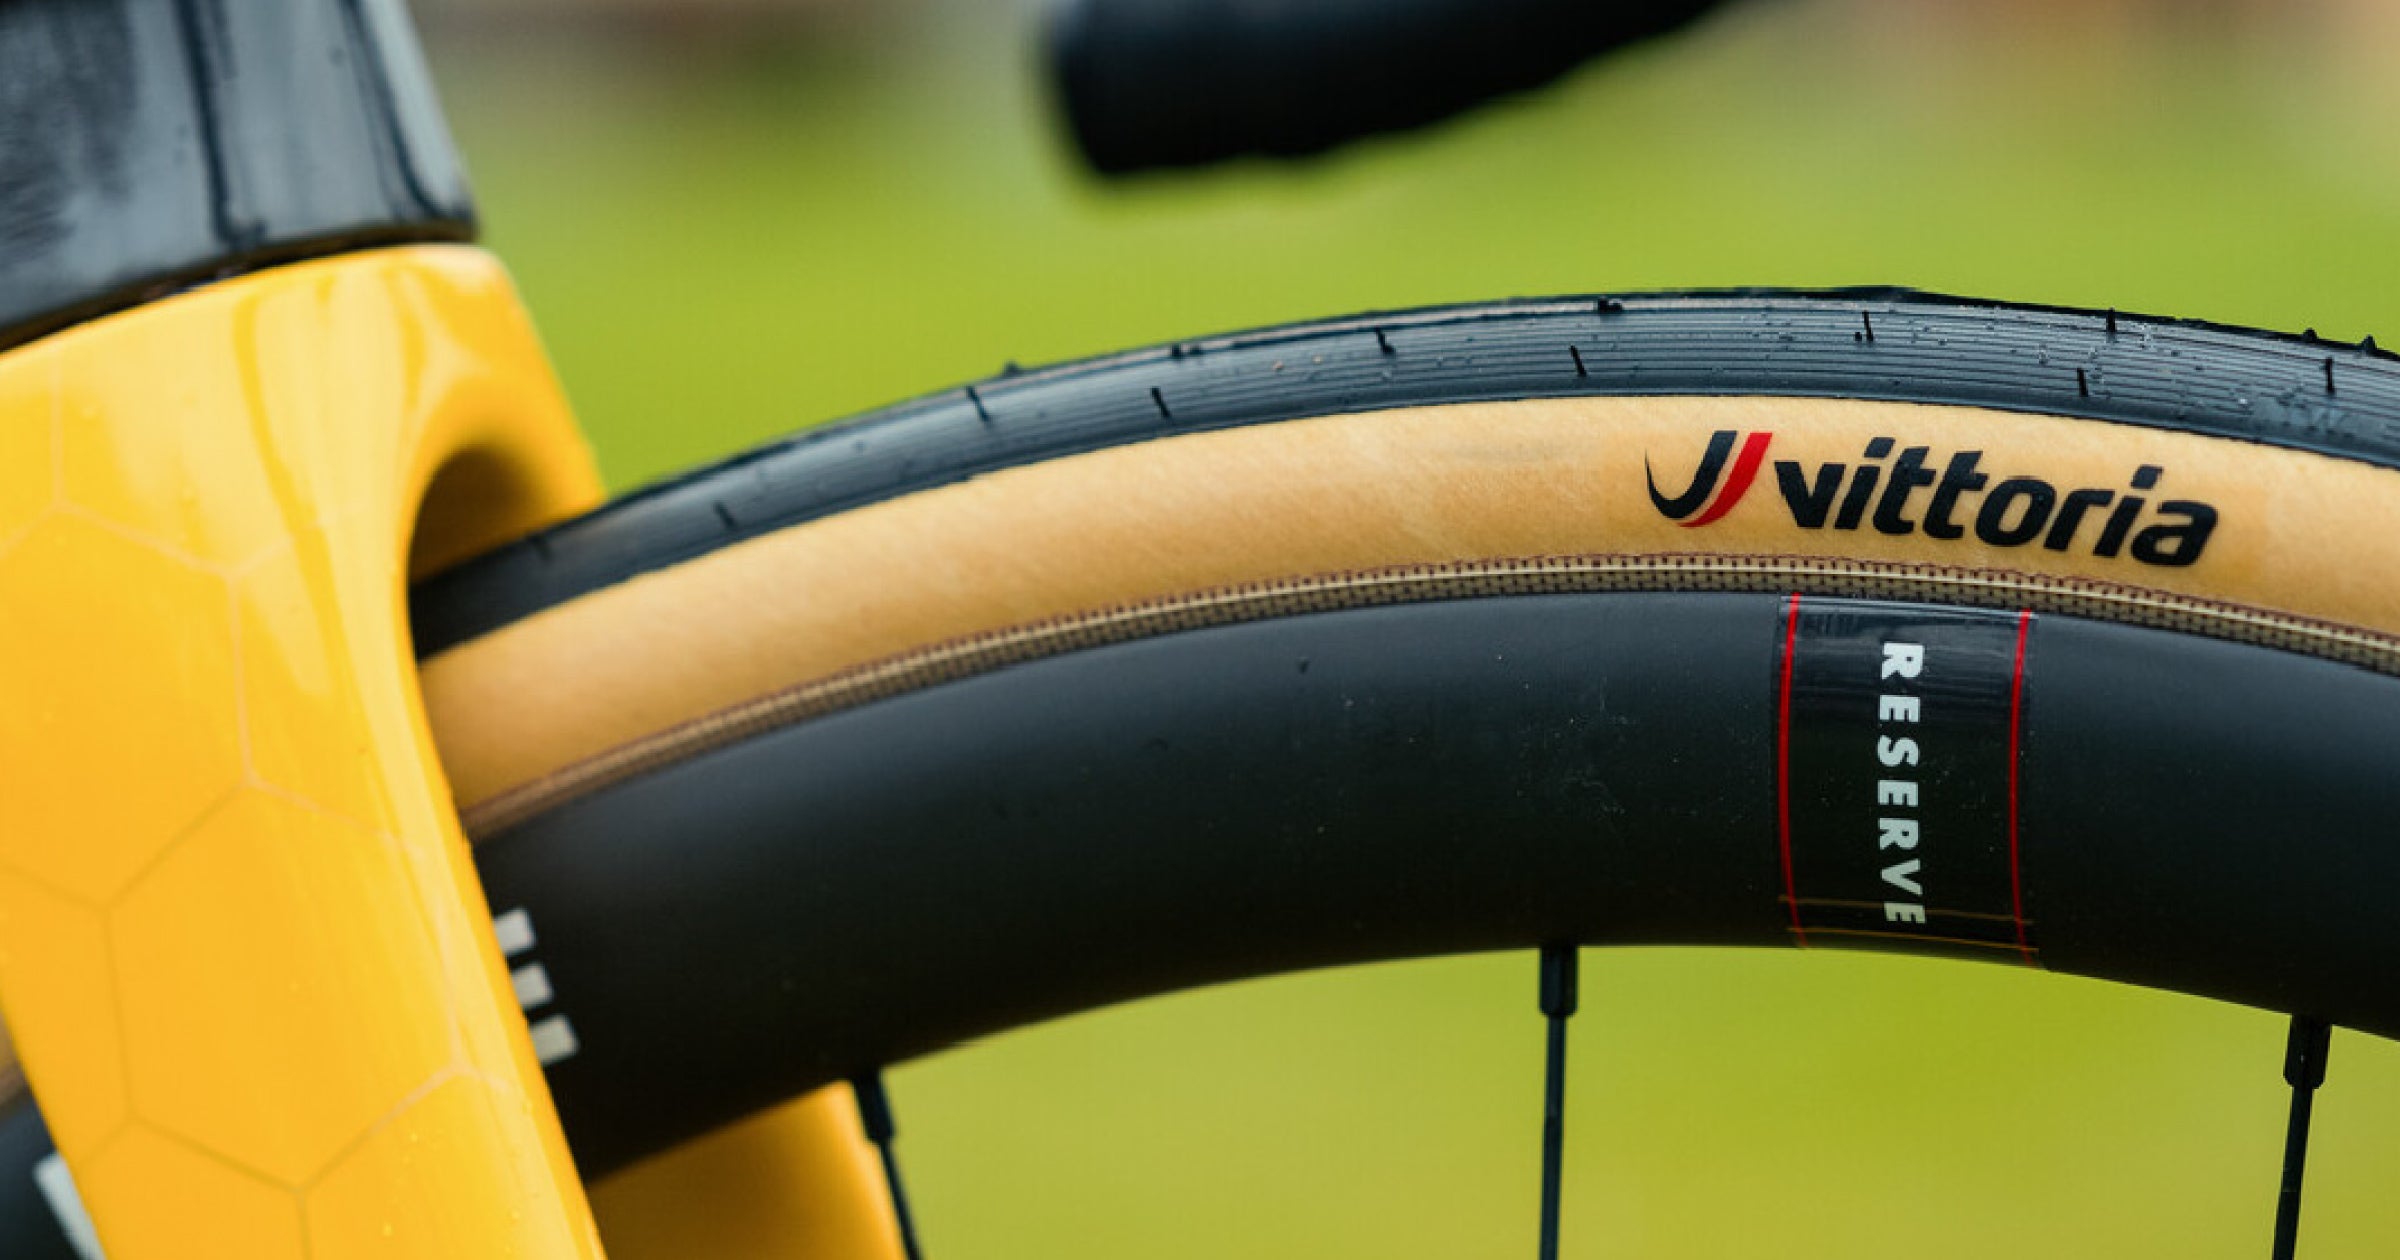 Vittoria and Team Visma | Lease a Bike extend partnership